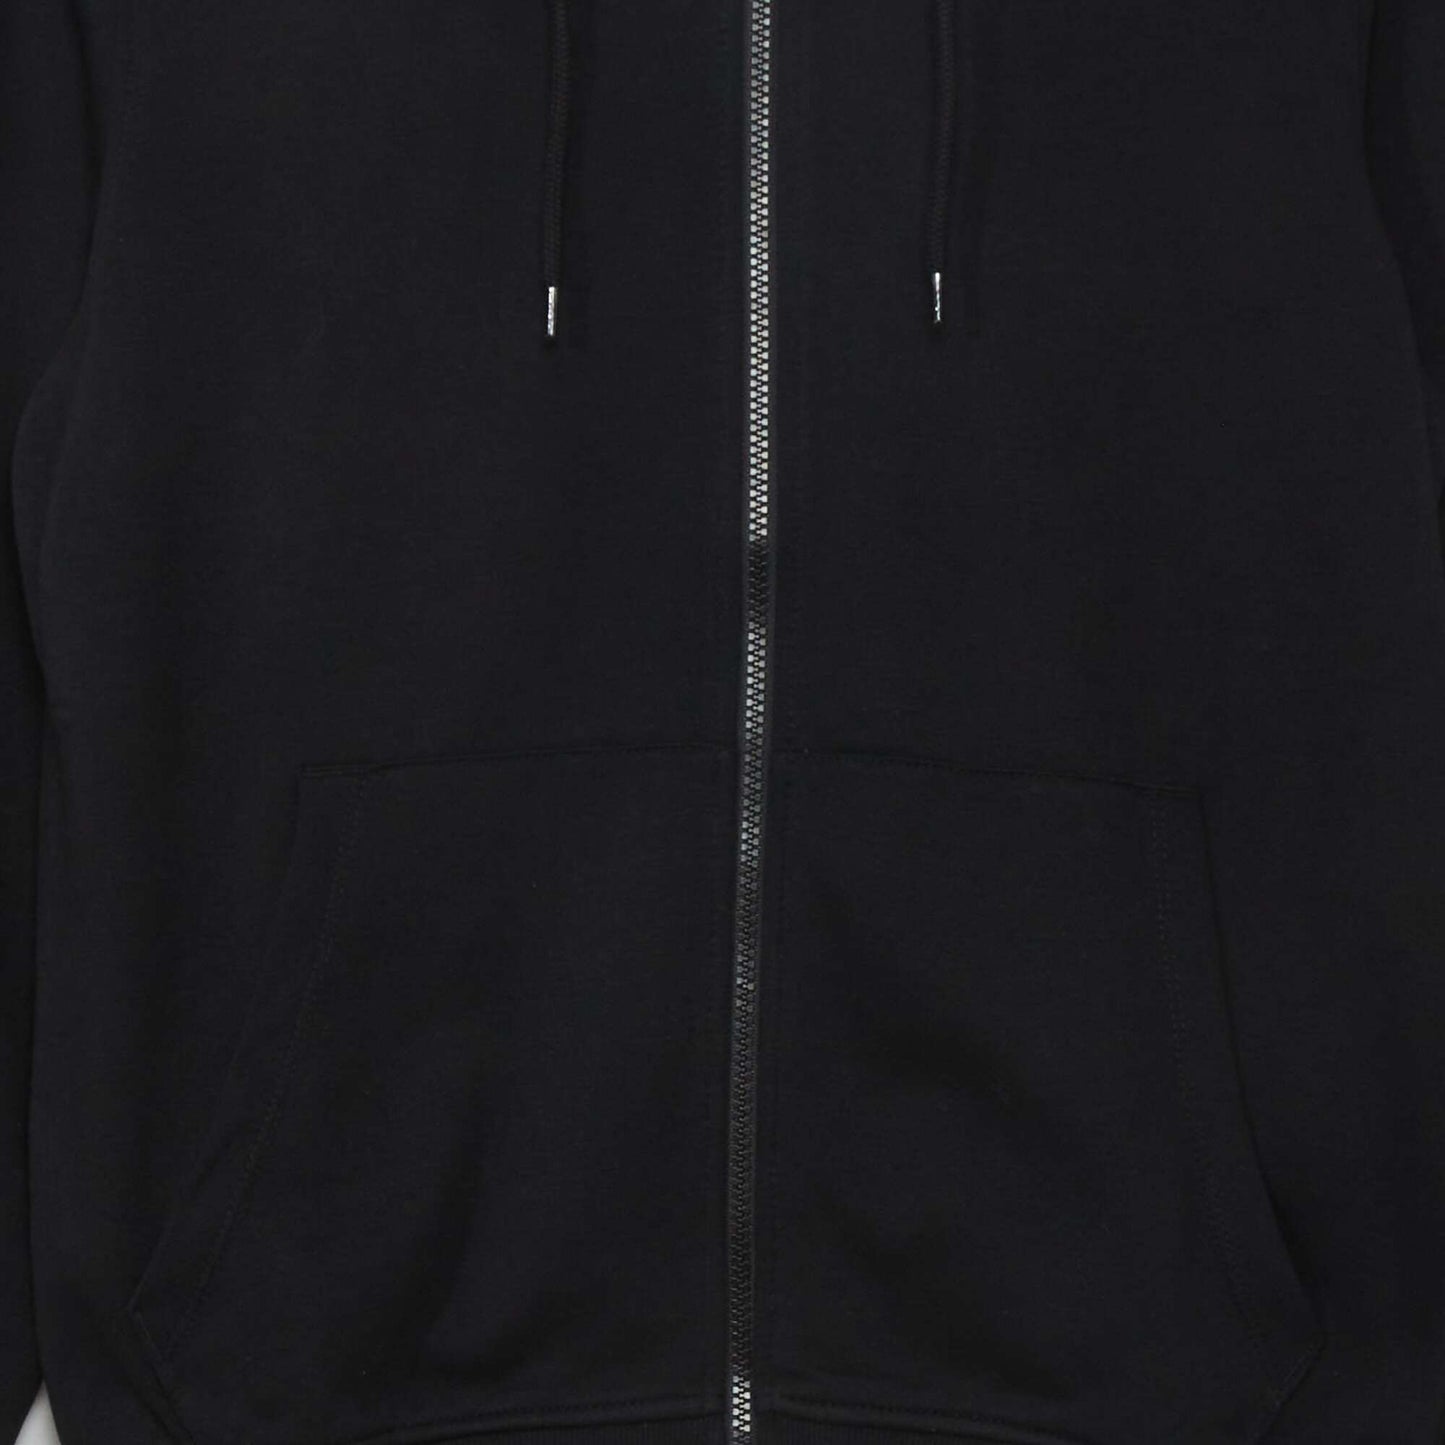 Zip-up jacket with hood REAL BLACK